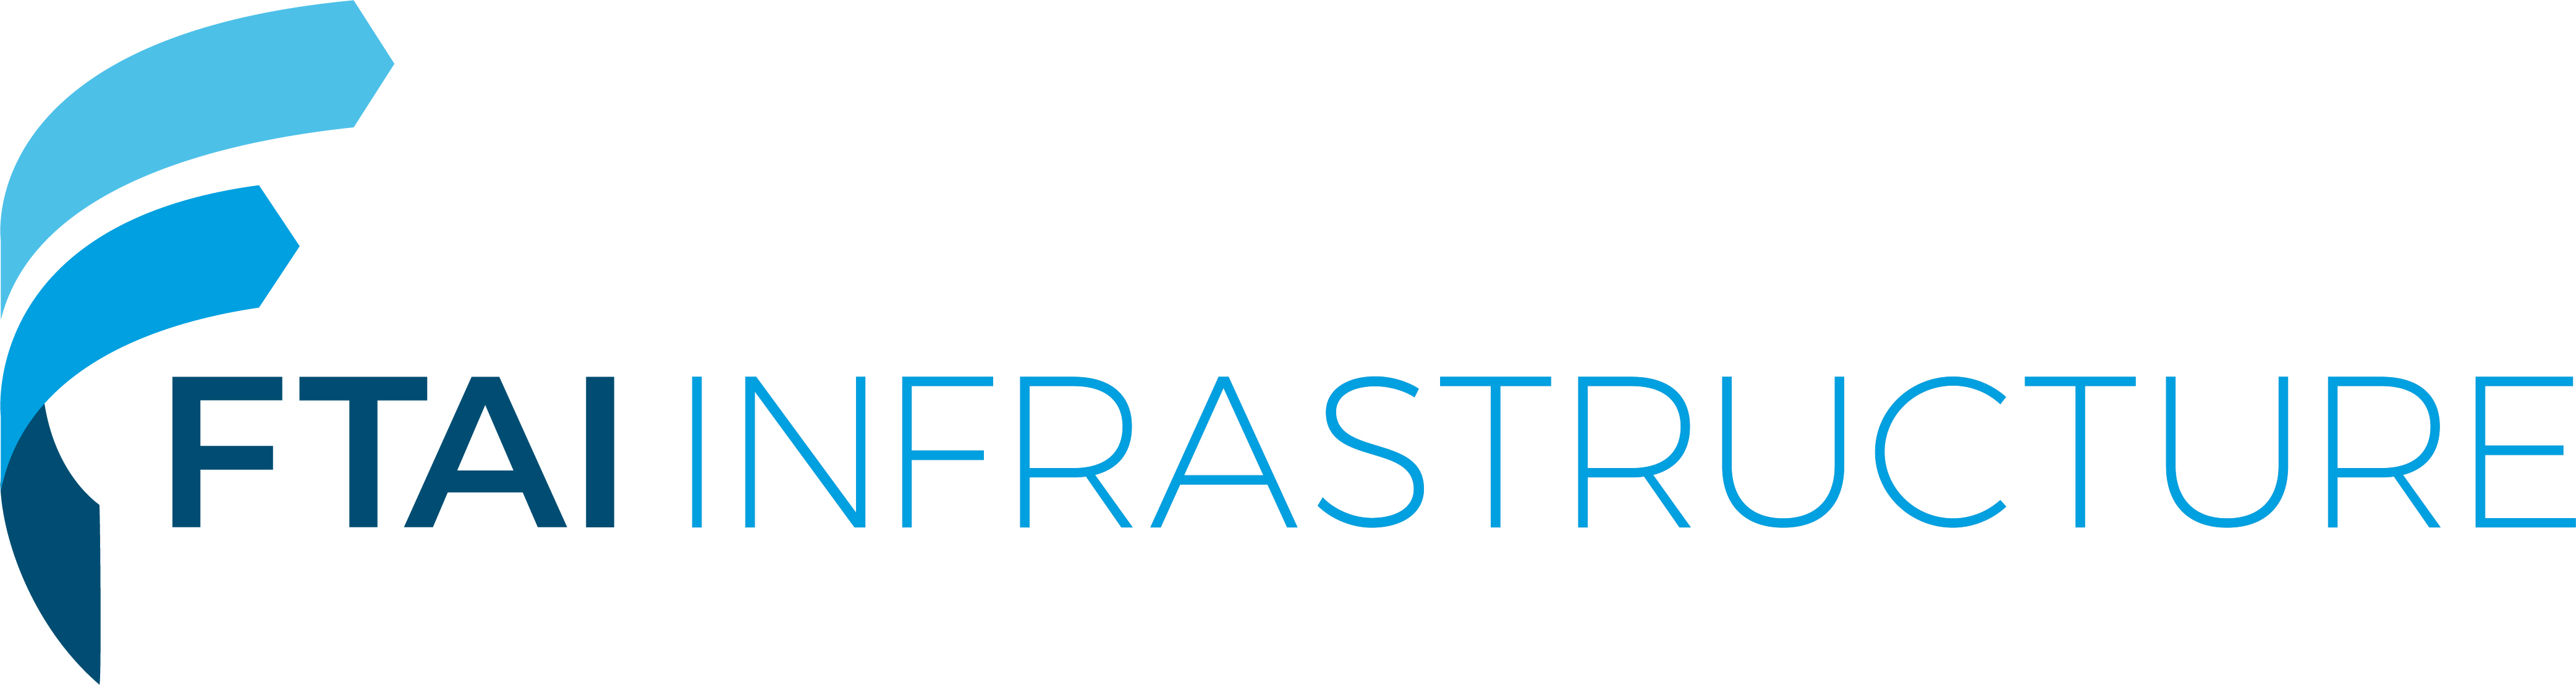 FTAI_Infrastructure_Logo.jpg